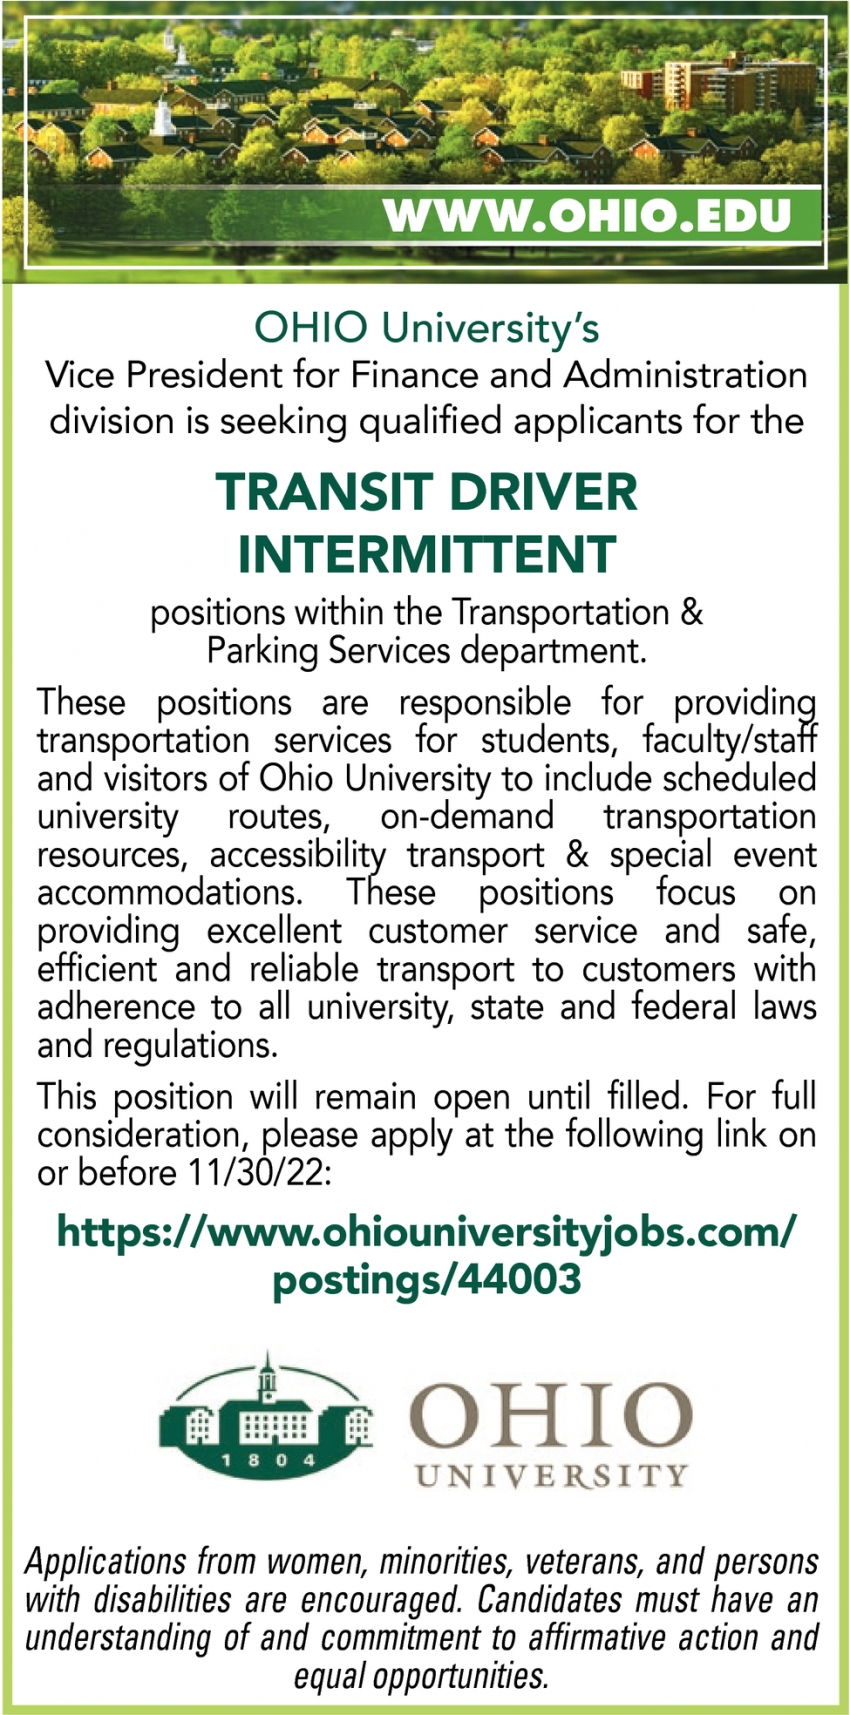 Transit Driver Intermittent